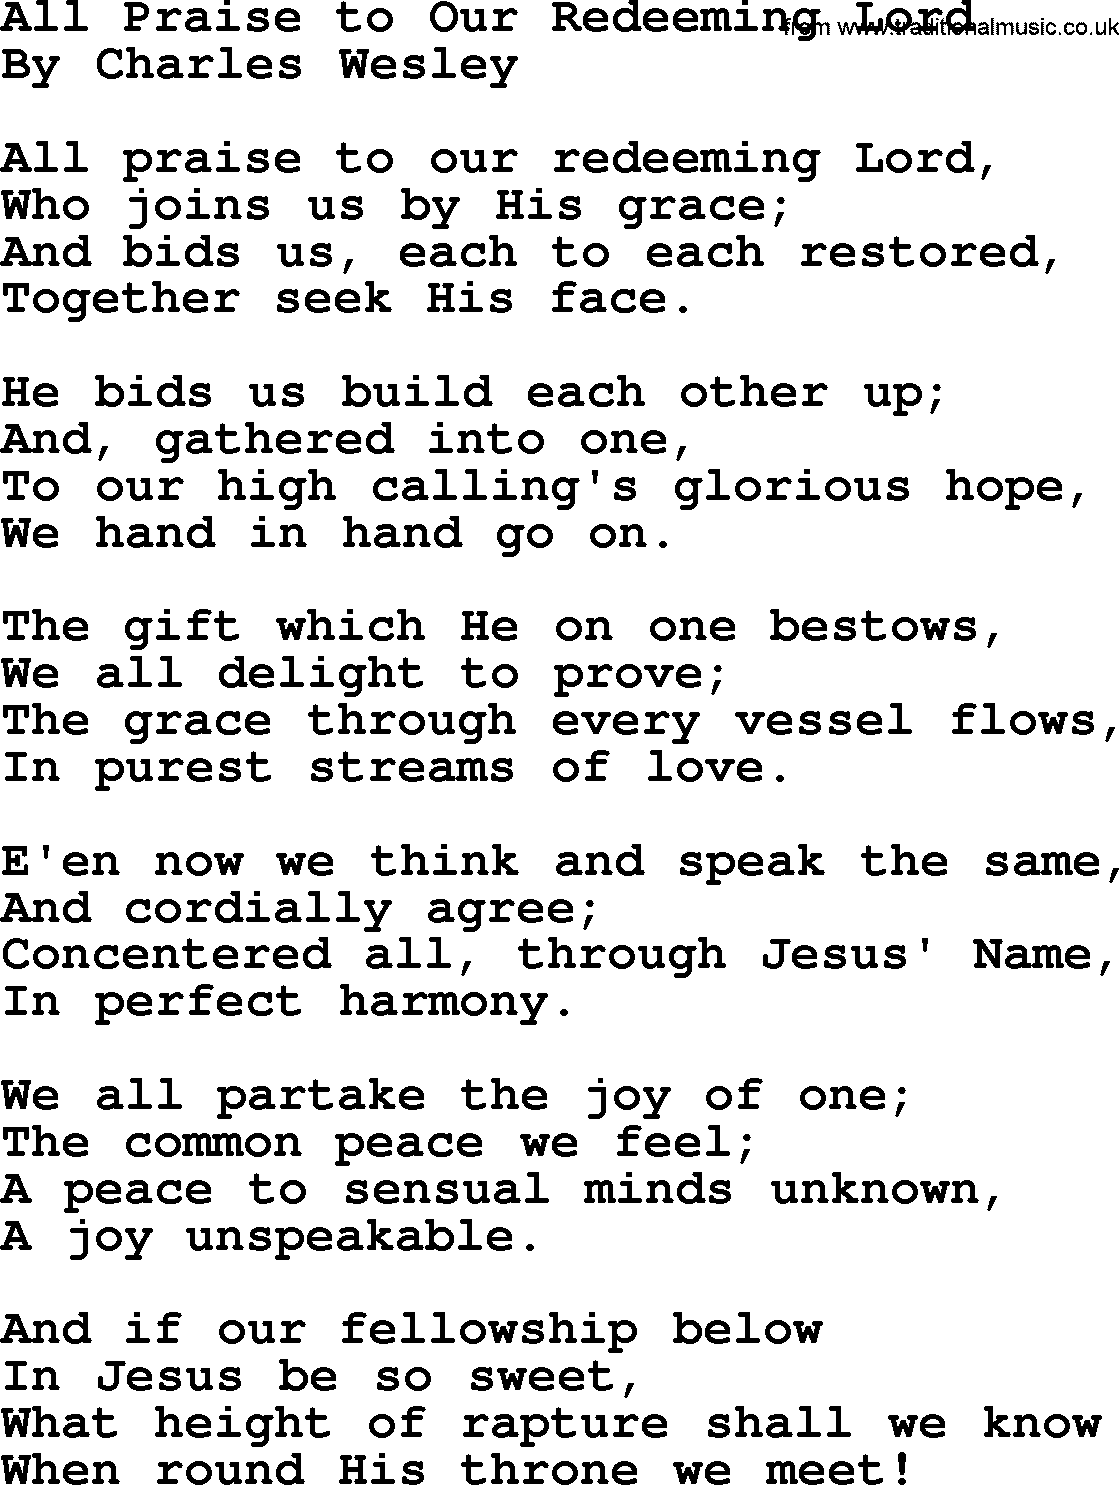 Charles Wesley hymn: All Praise To Our Redeeming Lord, lyrics